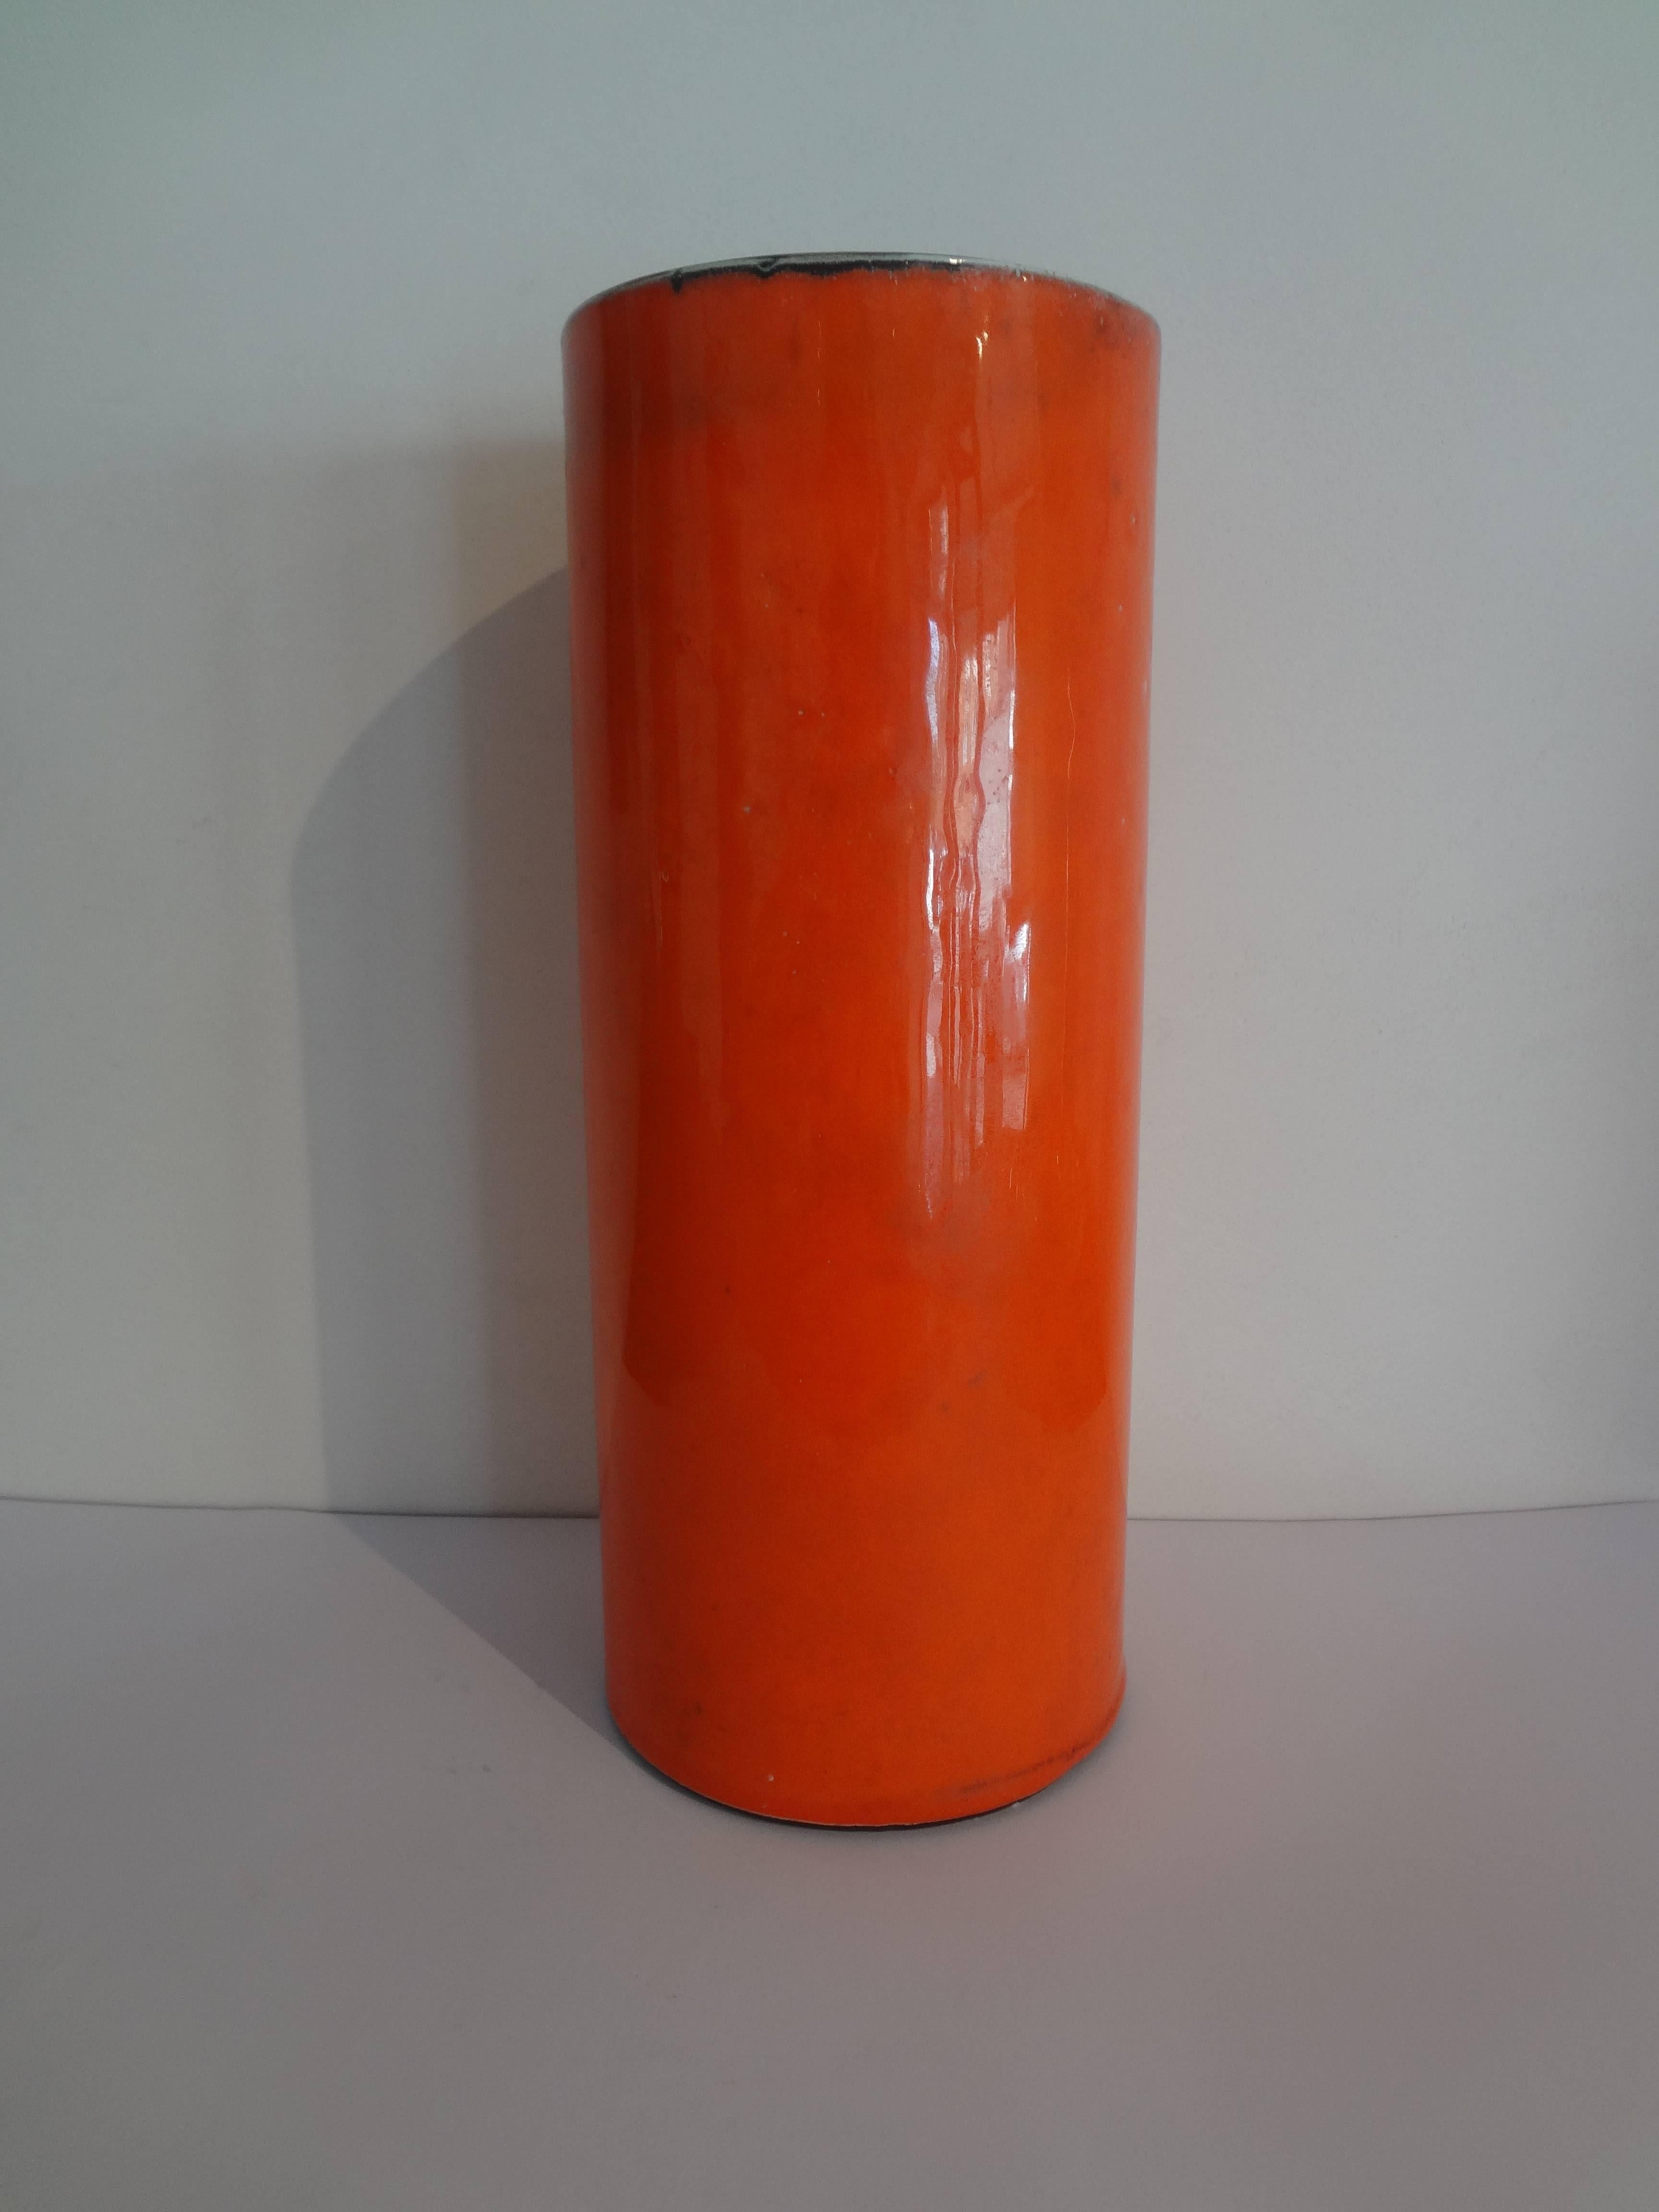 High orange cylinder vase.
Georges Jouve, circa 1956.
Shiny enamelled cover with a mate black inside.
Signed Jouve and Alpha.

Ref : Michel Fare, Georges Jouve Ceramiste, 1965, Modèle p.71g, p.88.
     